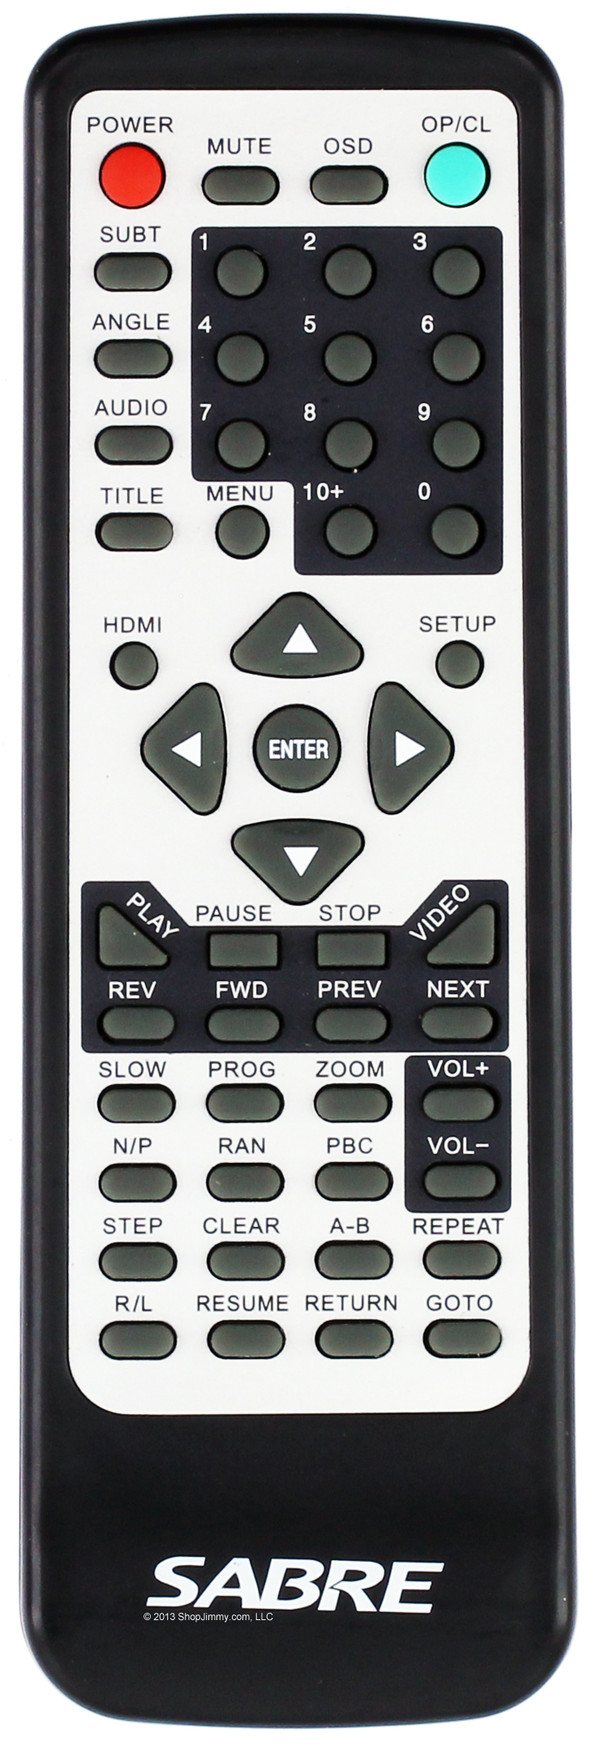 Sabre DVH300BKA (KM-268B-1, KM-268B) Remote Control